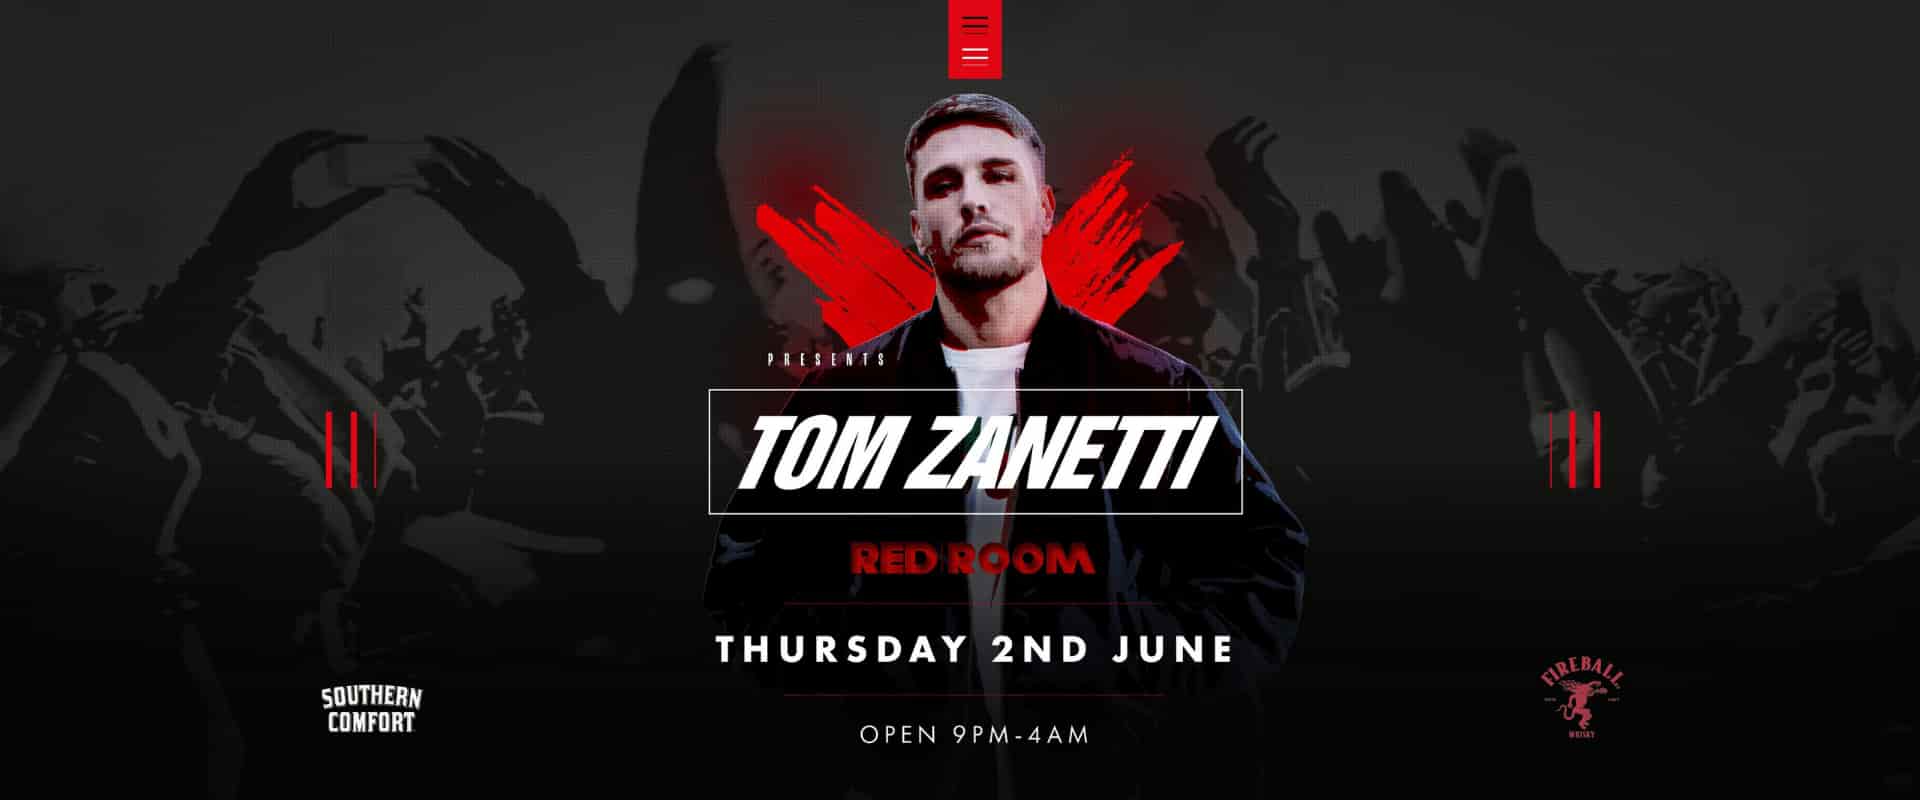 Tom Zanetti 2nd June